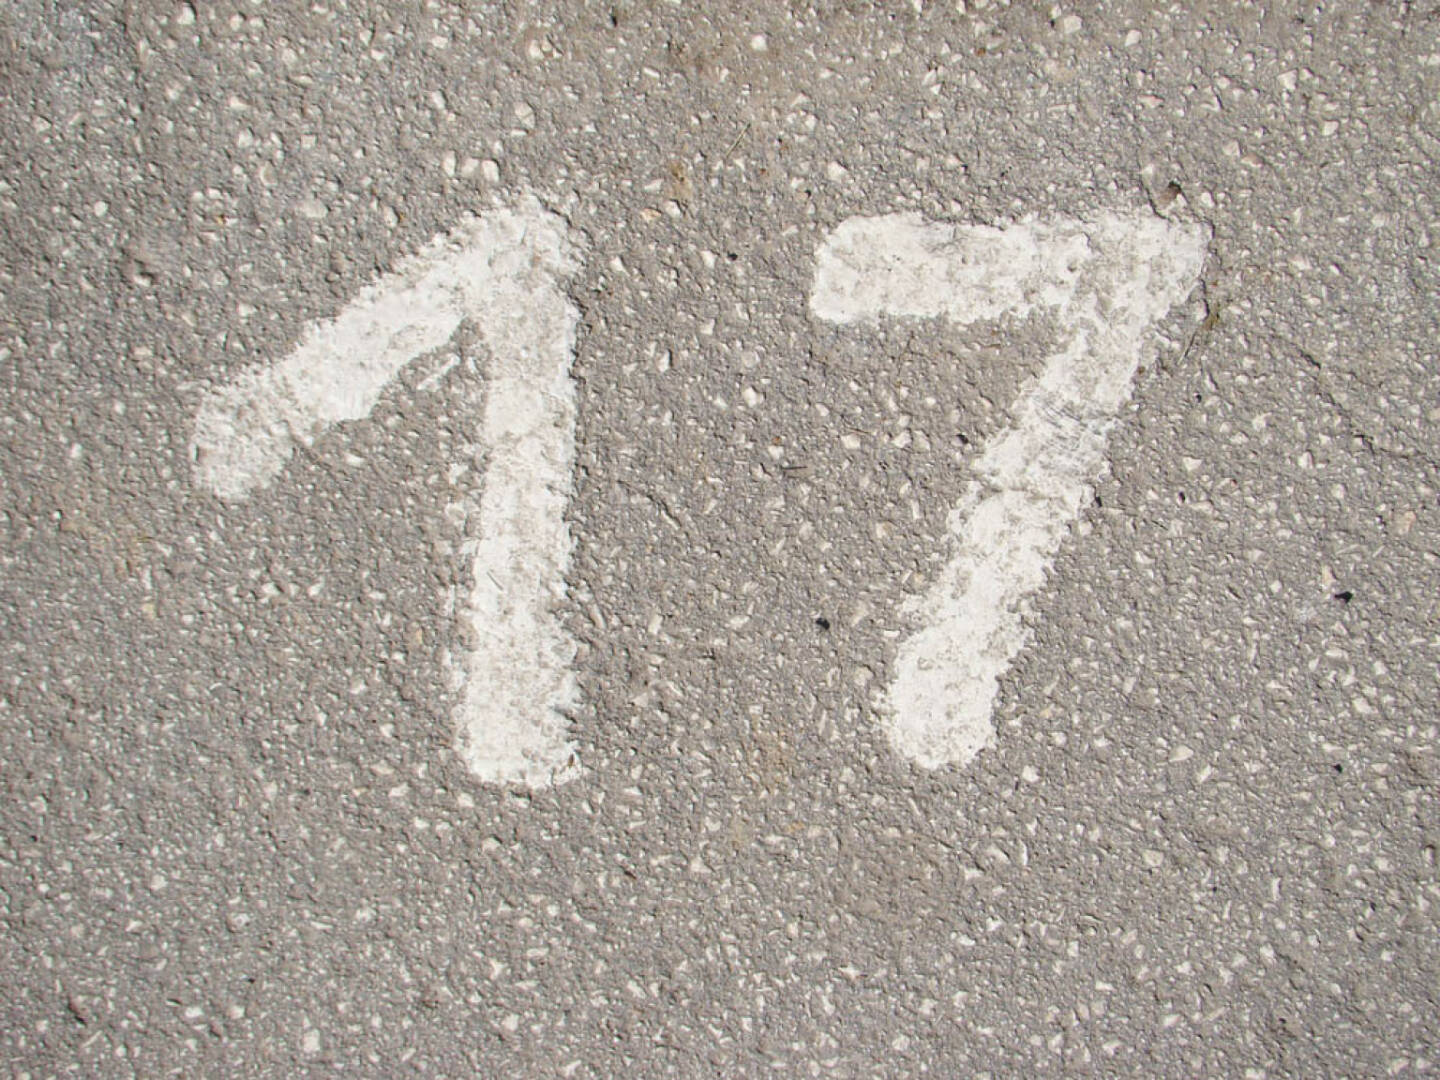 17, siebzehn, http://www.shutterstock.com/de/pic-187254560/stock-photo-number-seventeen.html